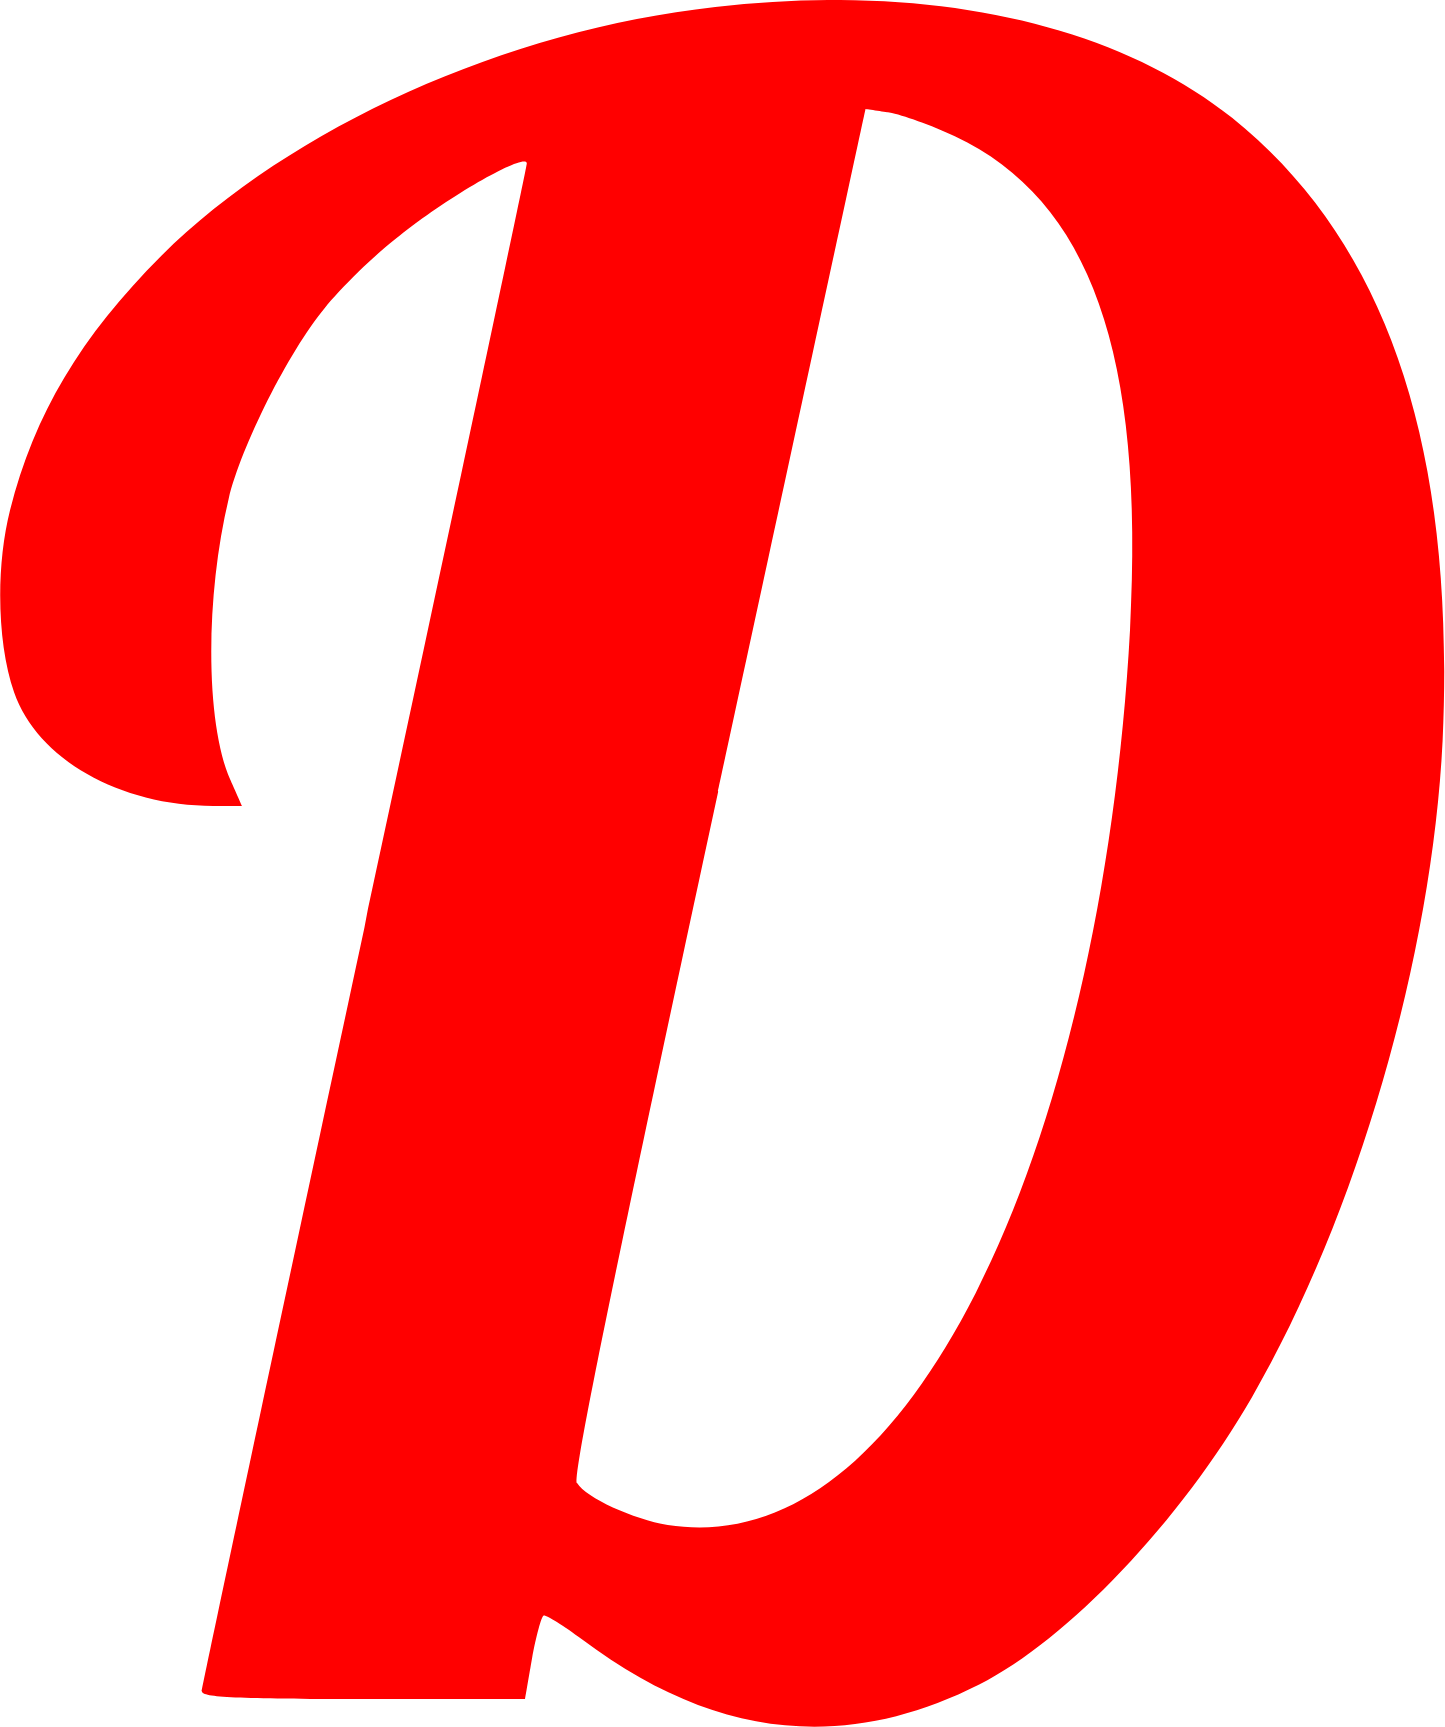 Digital Bros logo (PNG transparent)